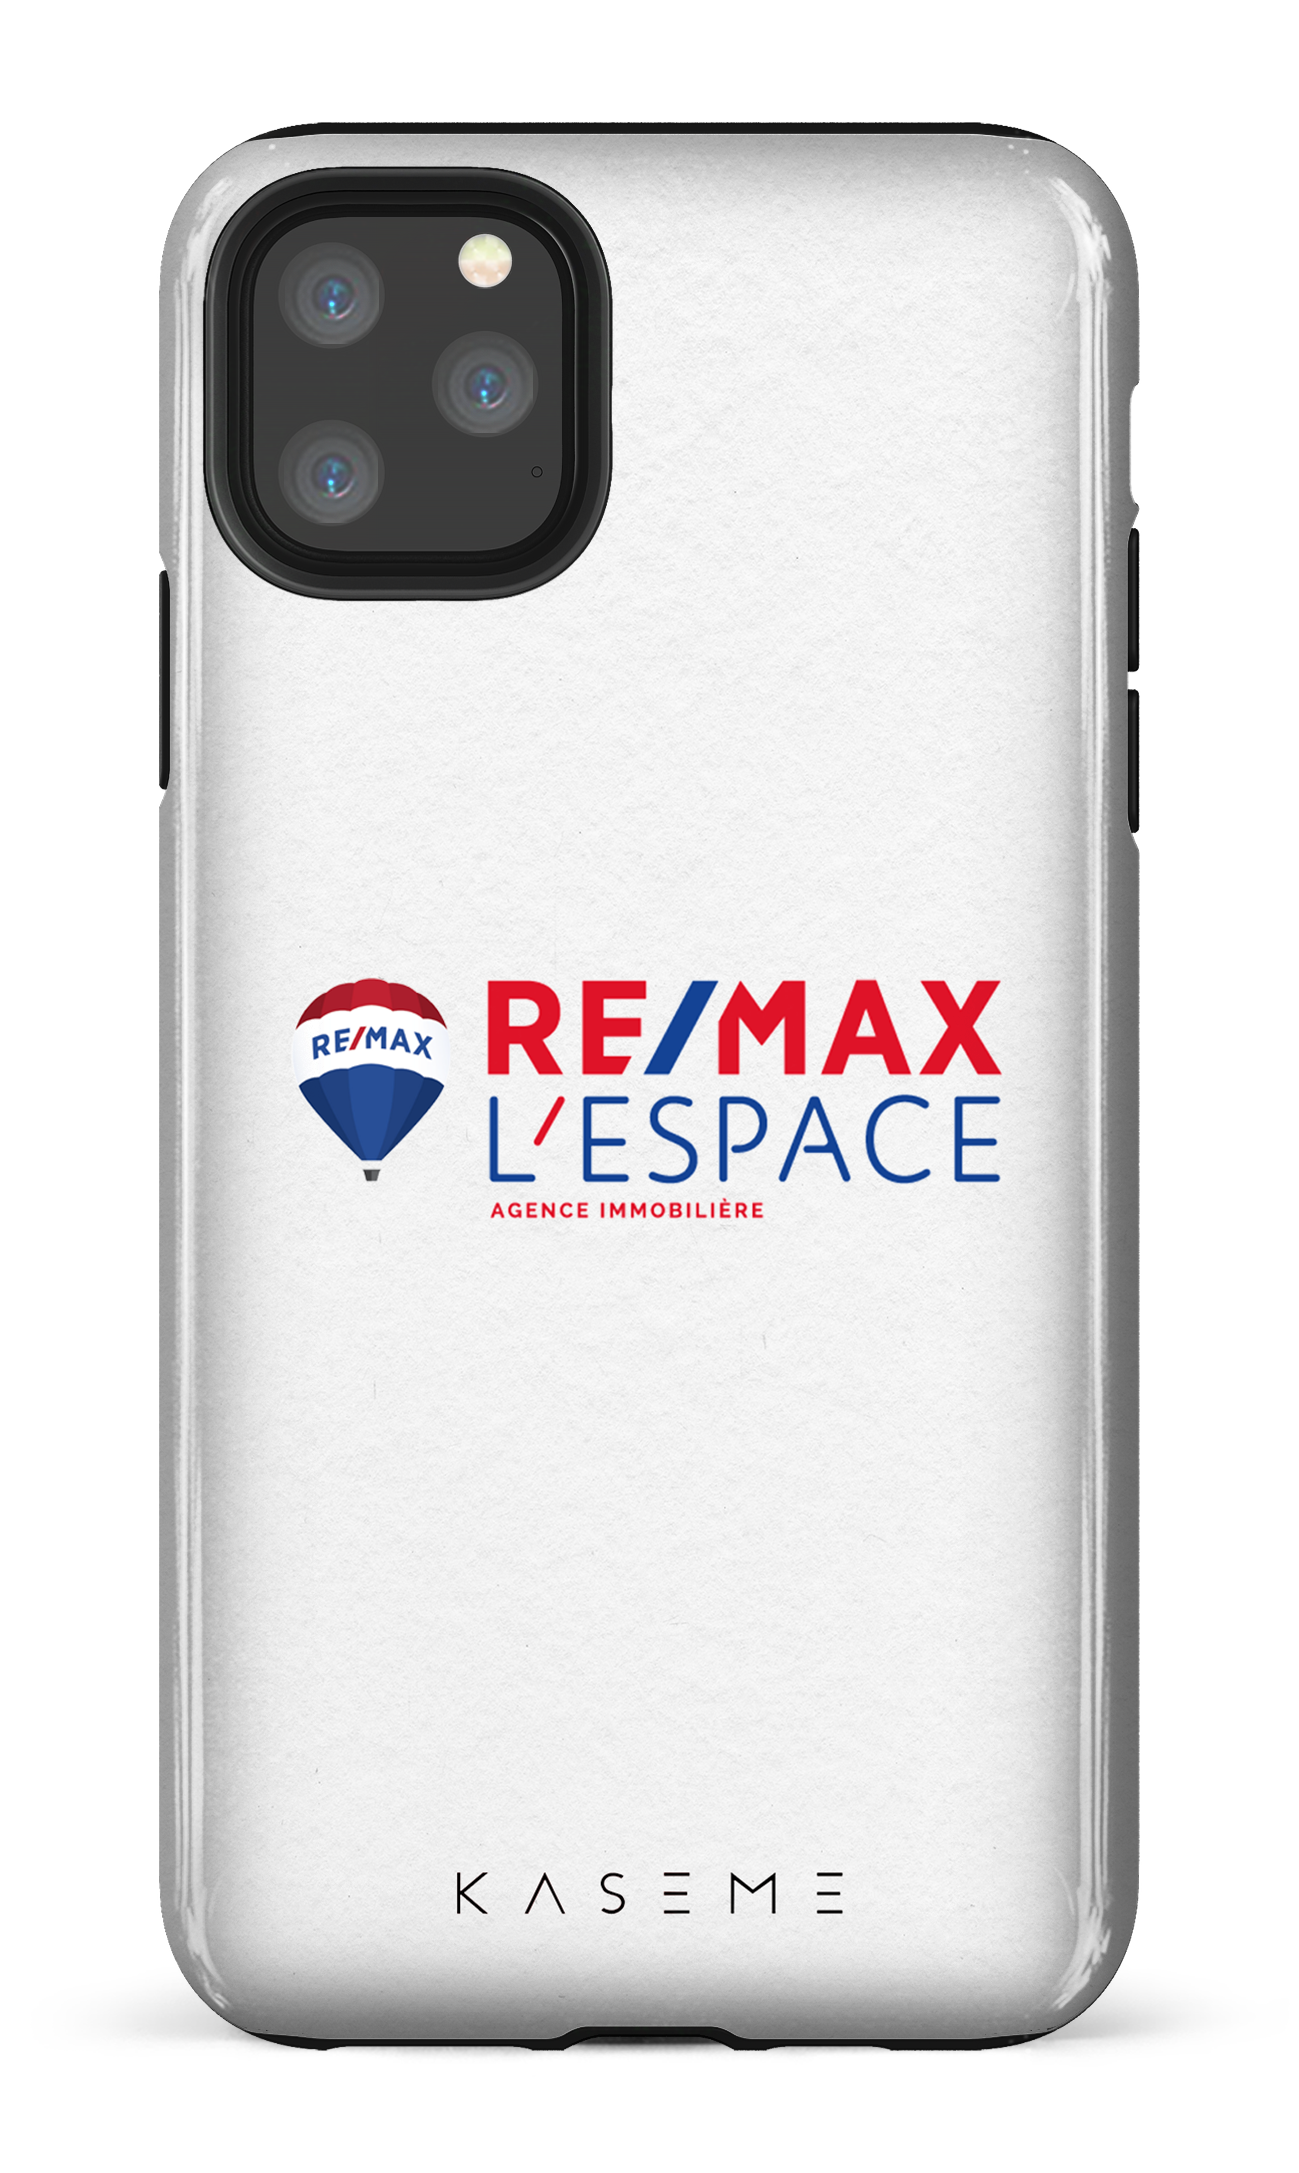 Remax L'Espace Blanc - iPhone 11 Pro Max